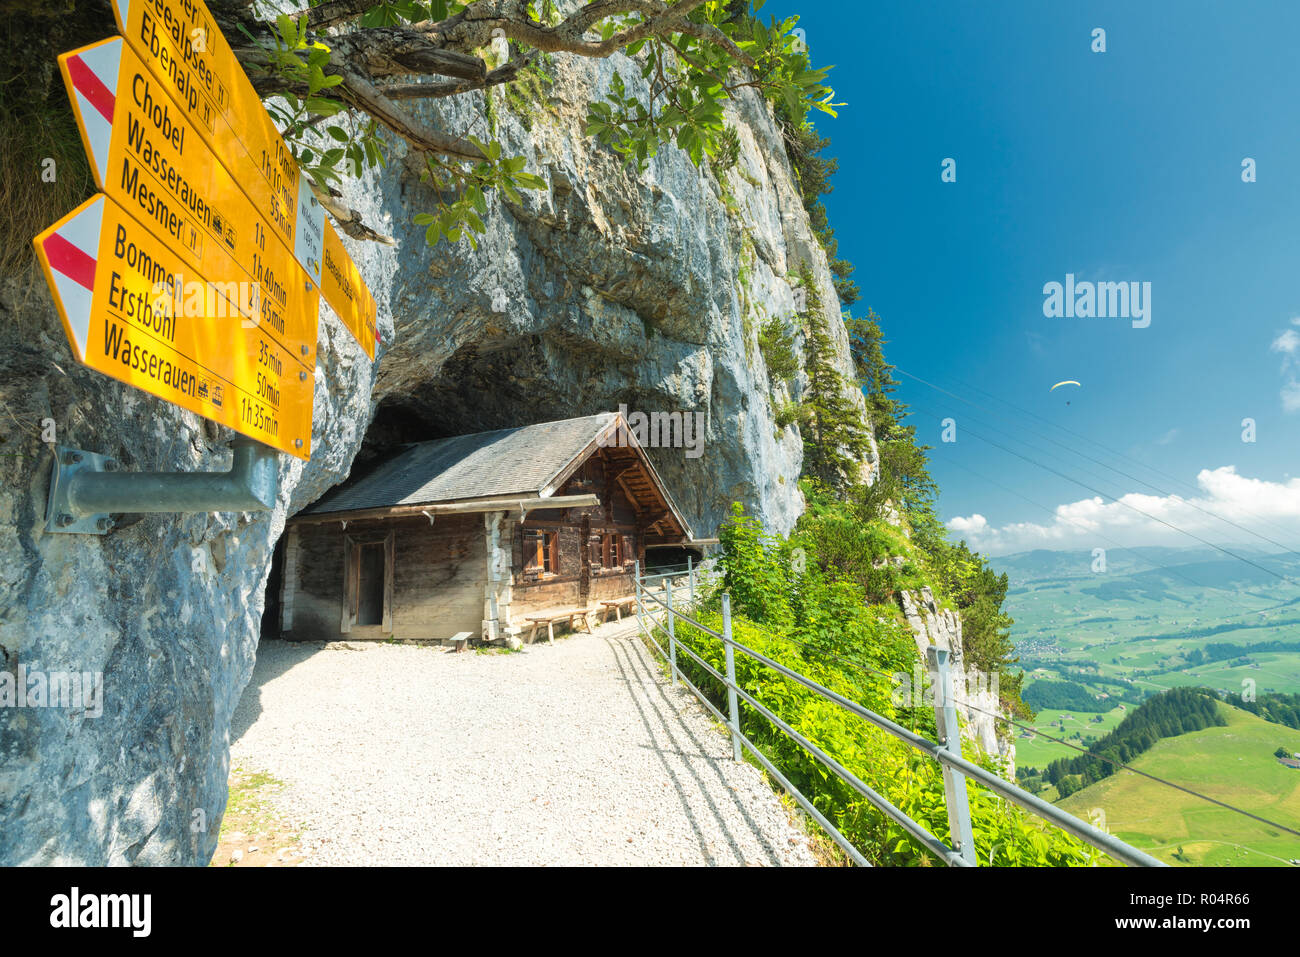 Segnaletica dei sentieri escursionistici, Wildkirchli, Ebenalp, Appenzell Innerrhoden, Svizzera, Europa Foto Stock